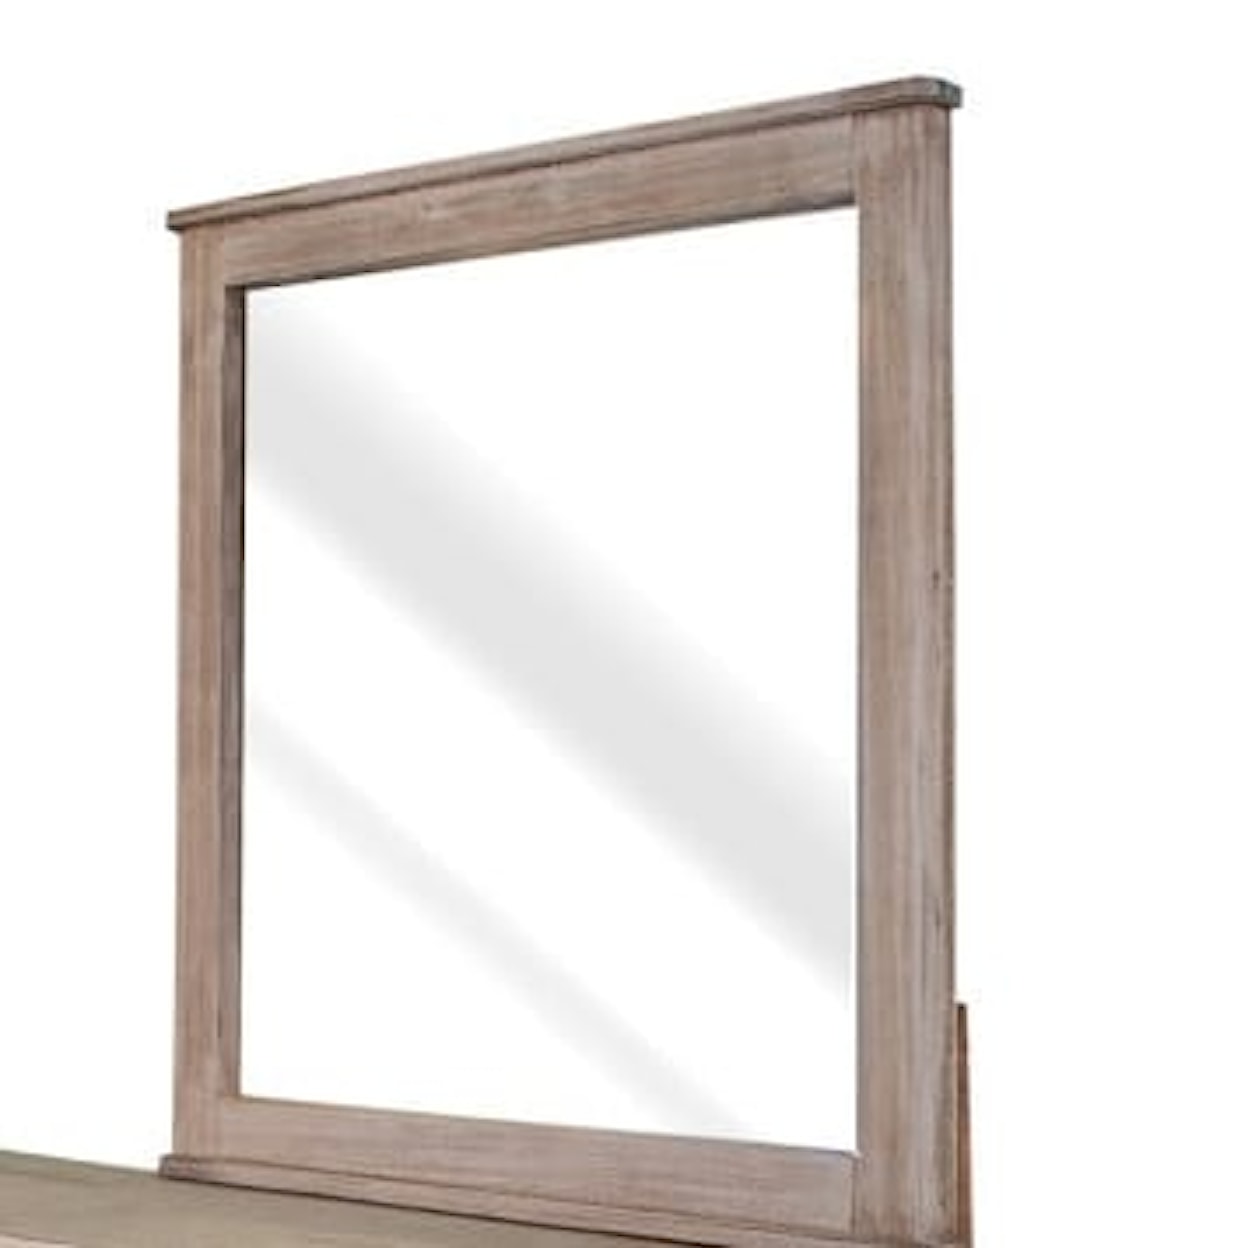 VFM Signature Nizuc Bedroom Collection Dresser Mirror with Solid Wood Trim